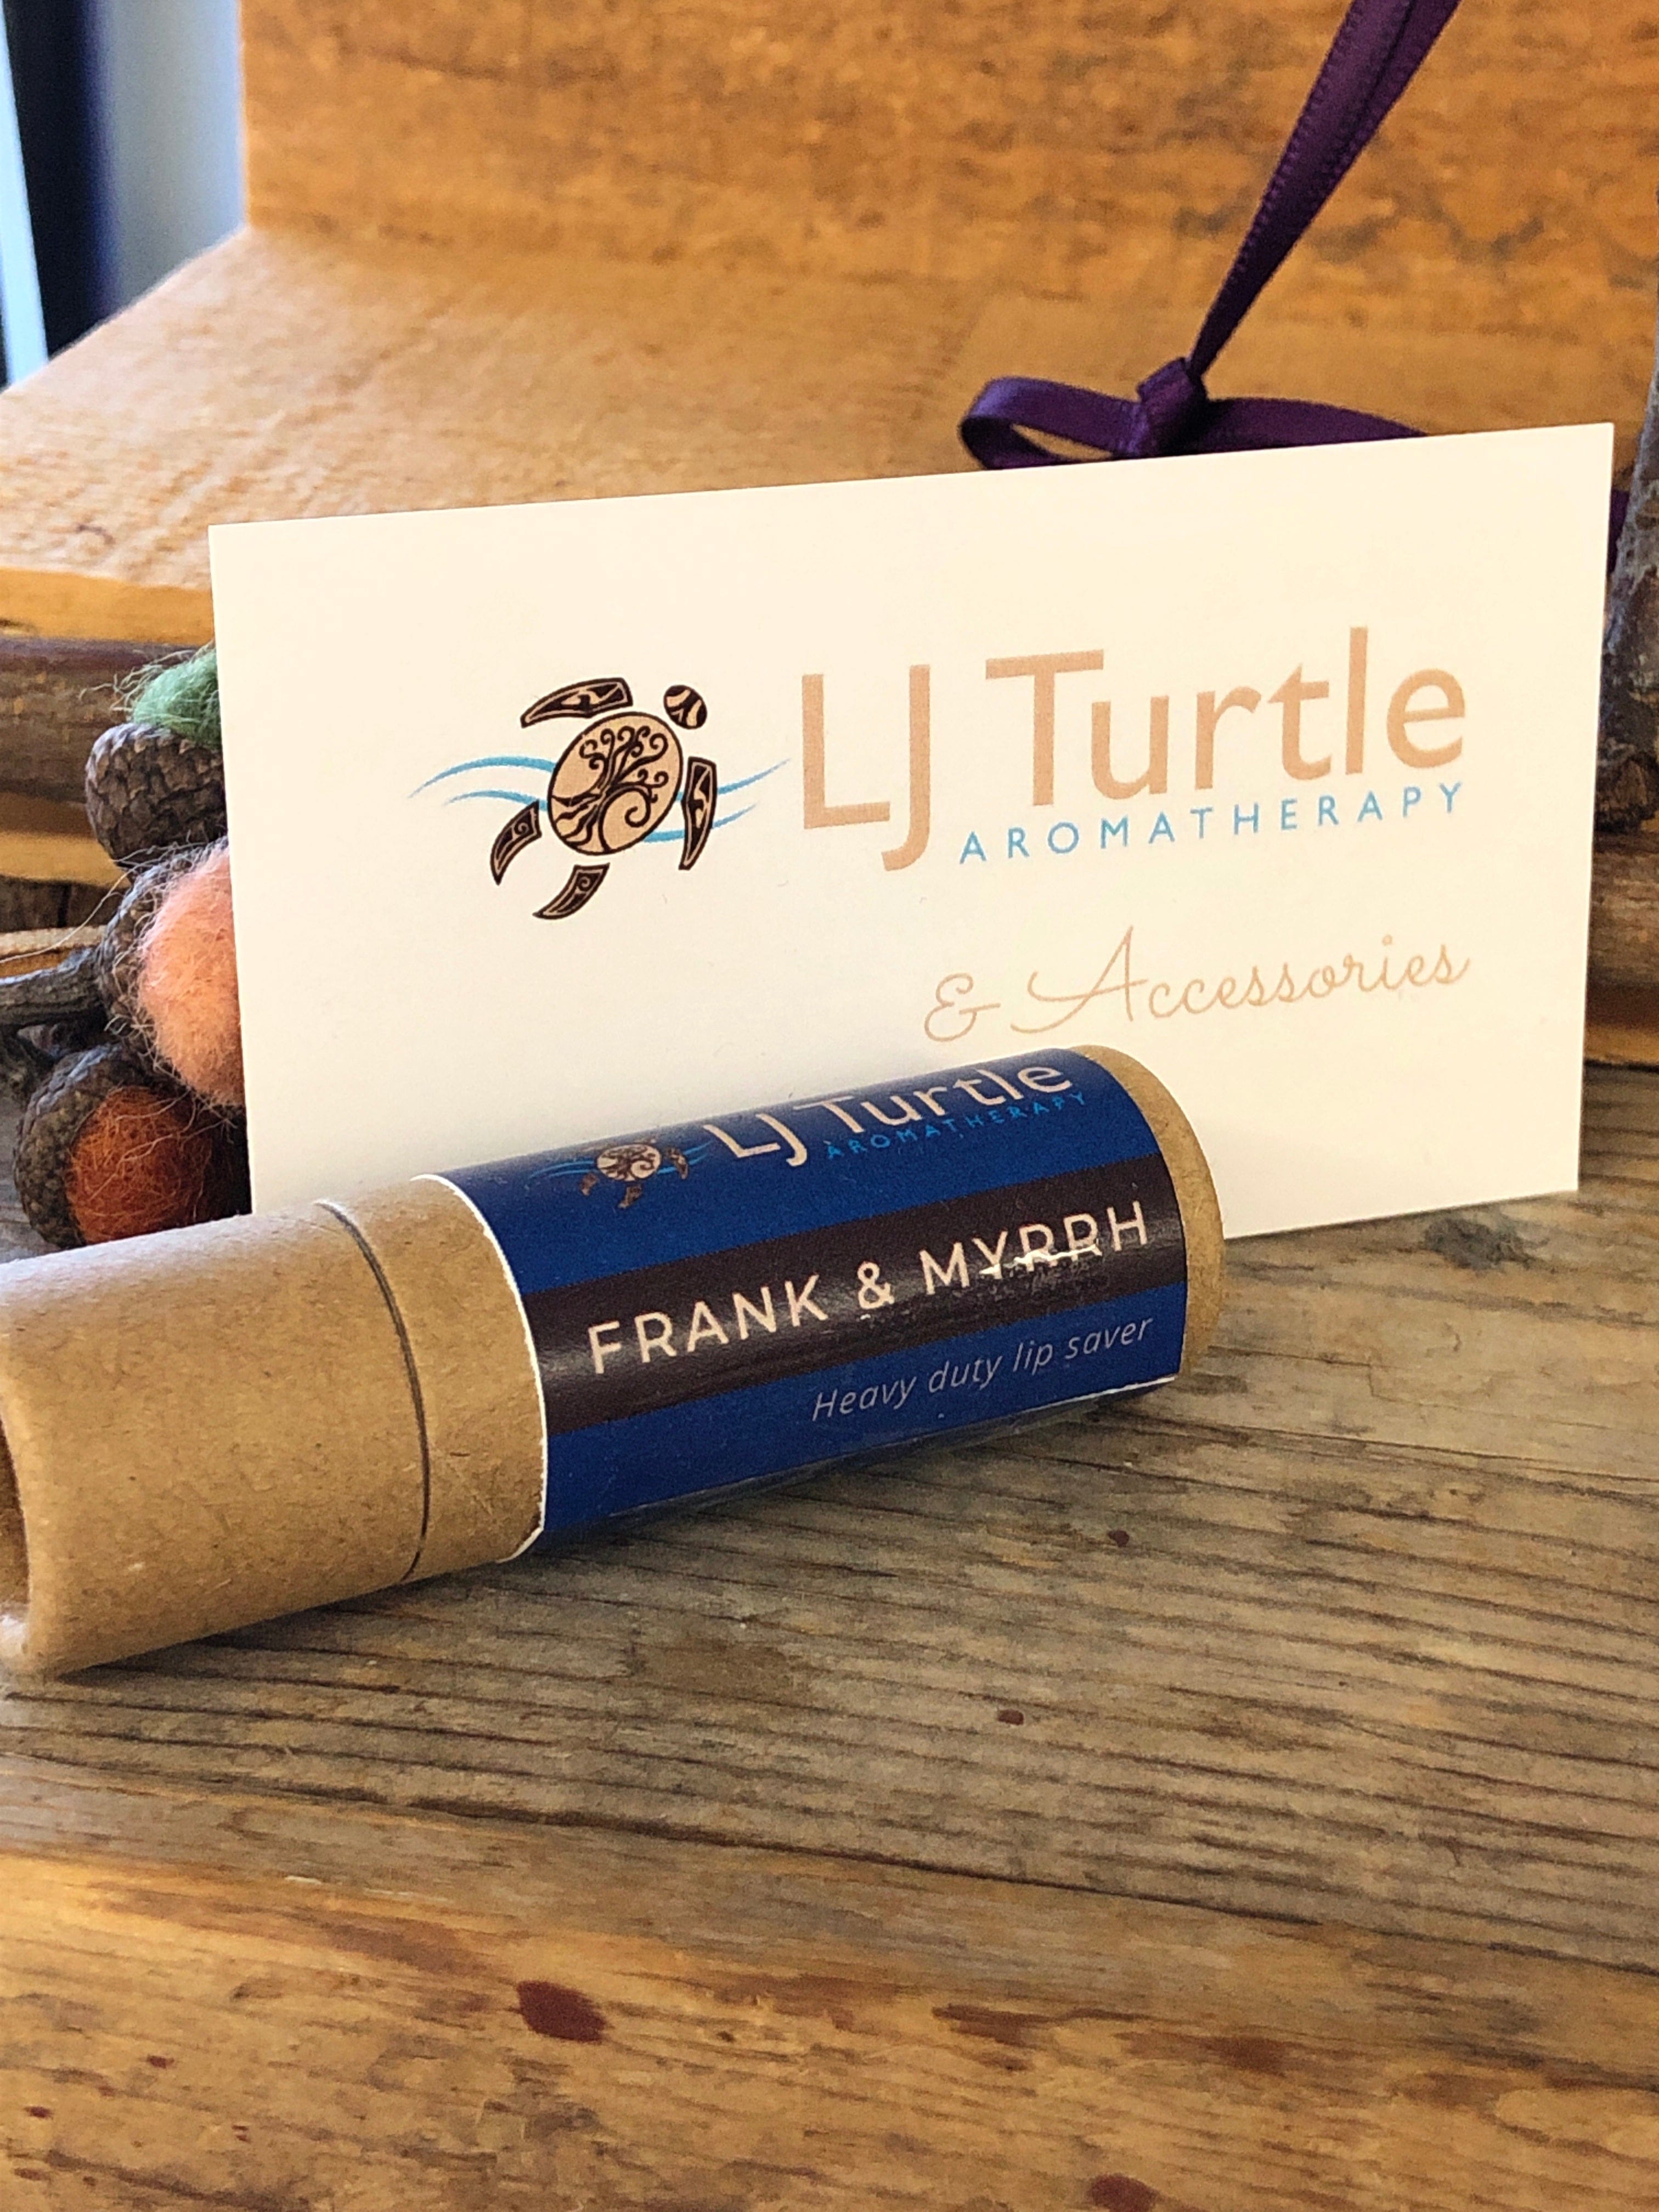 LJ Turtle Aromatherapy & Accessories Frank & Myrrh Lipsaver